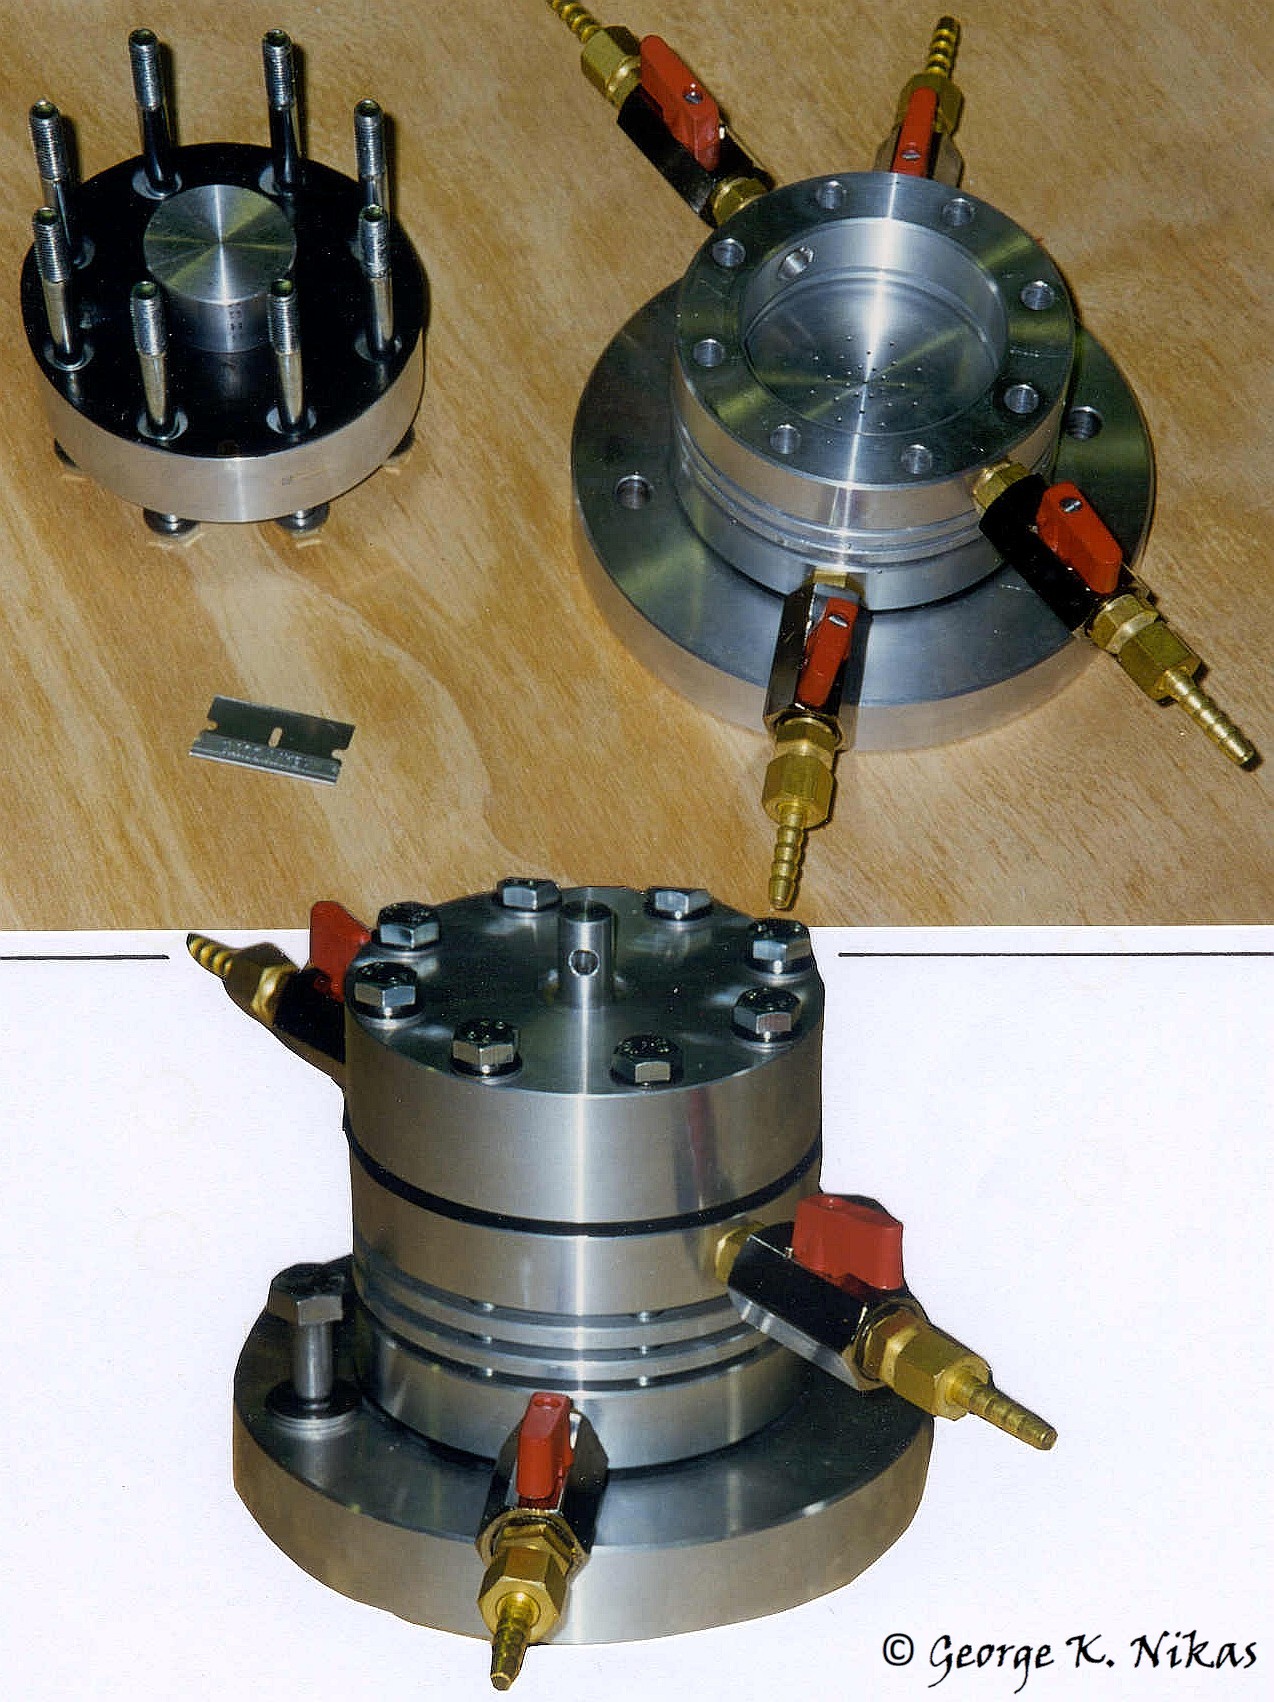 Porous-bearing project - test rig. Copyright George K. Nikas